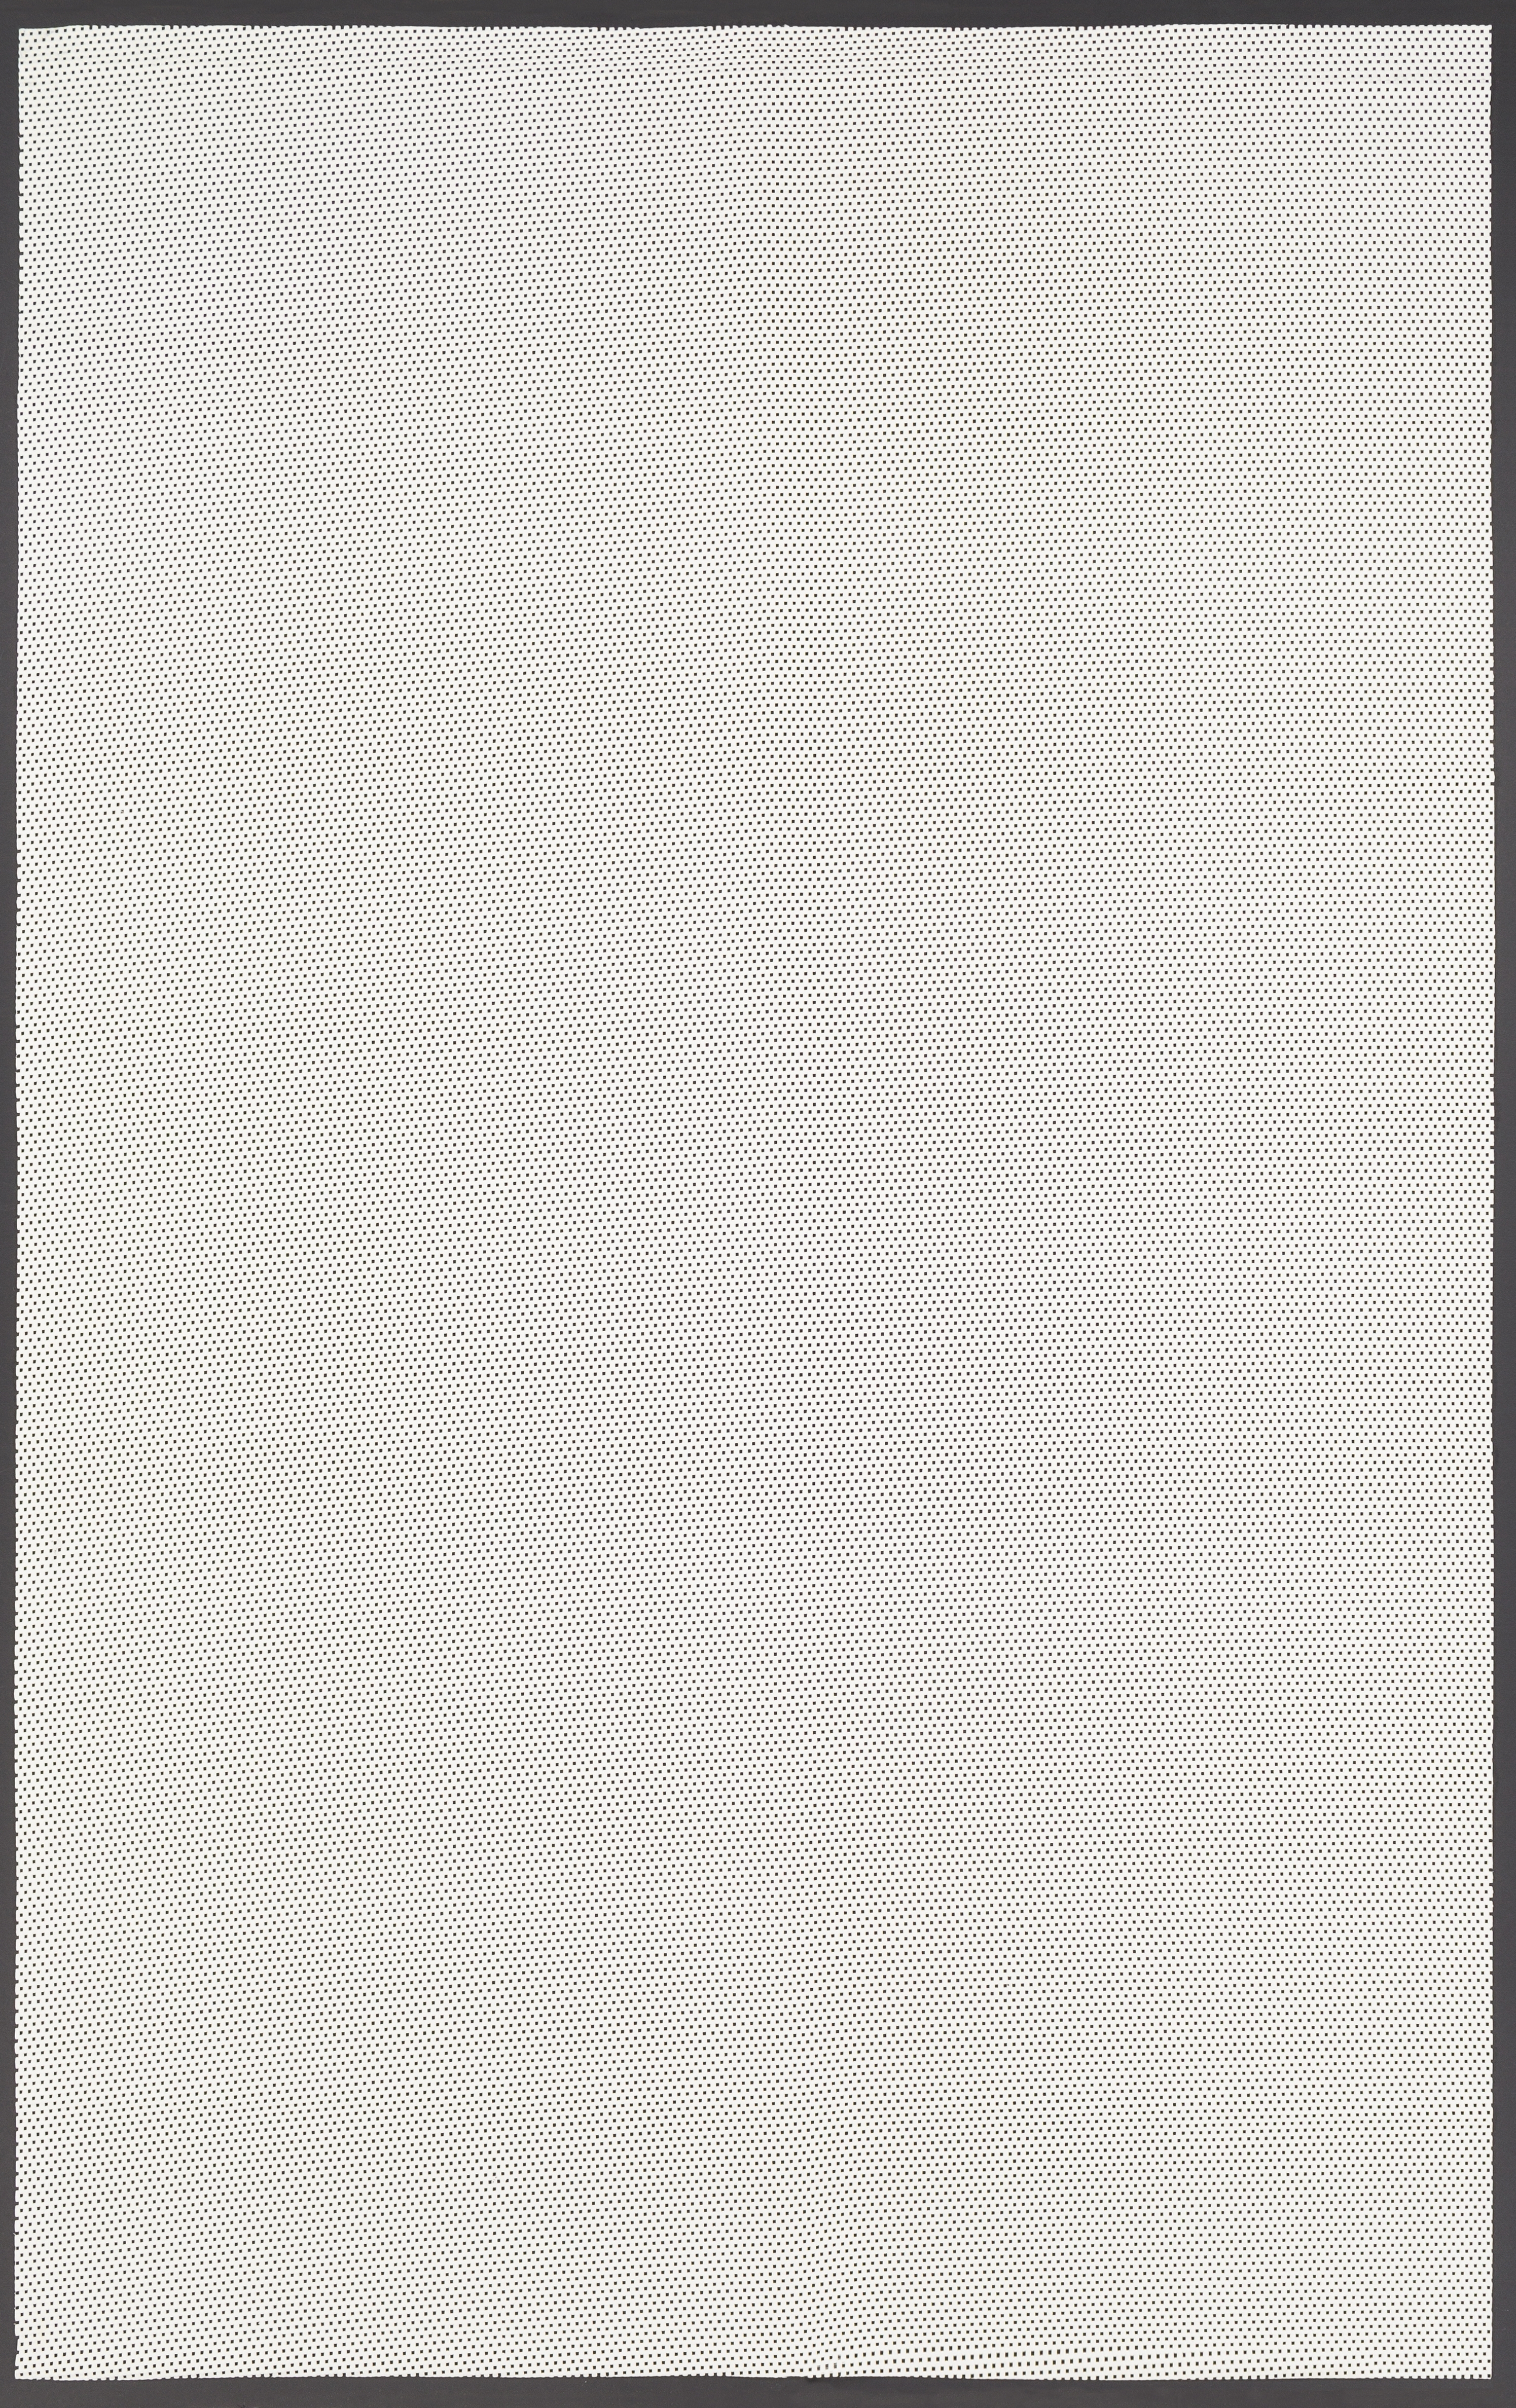 L & G Rug Pad 6' Round - Image 2